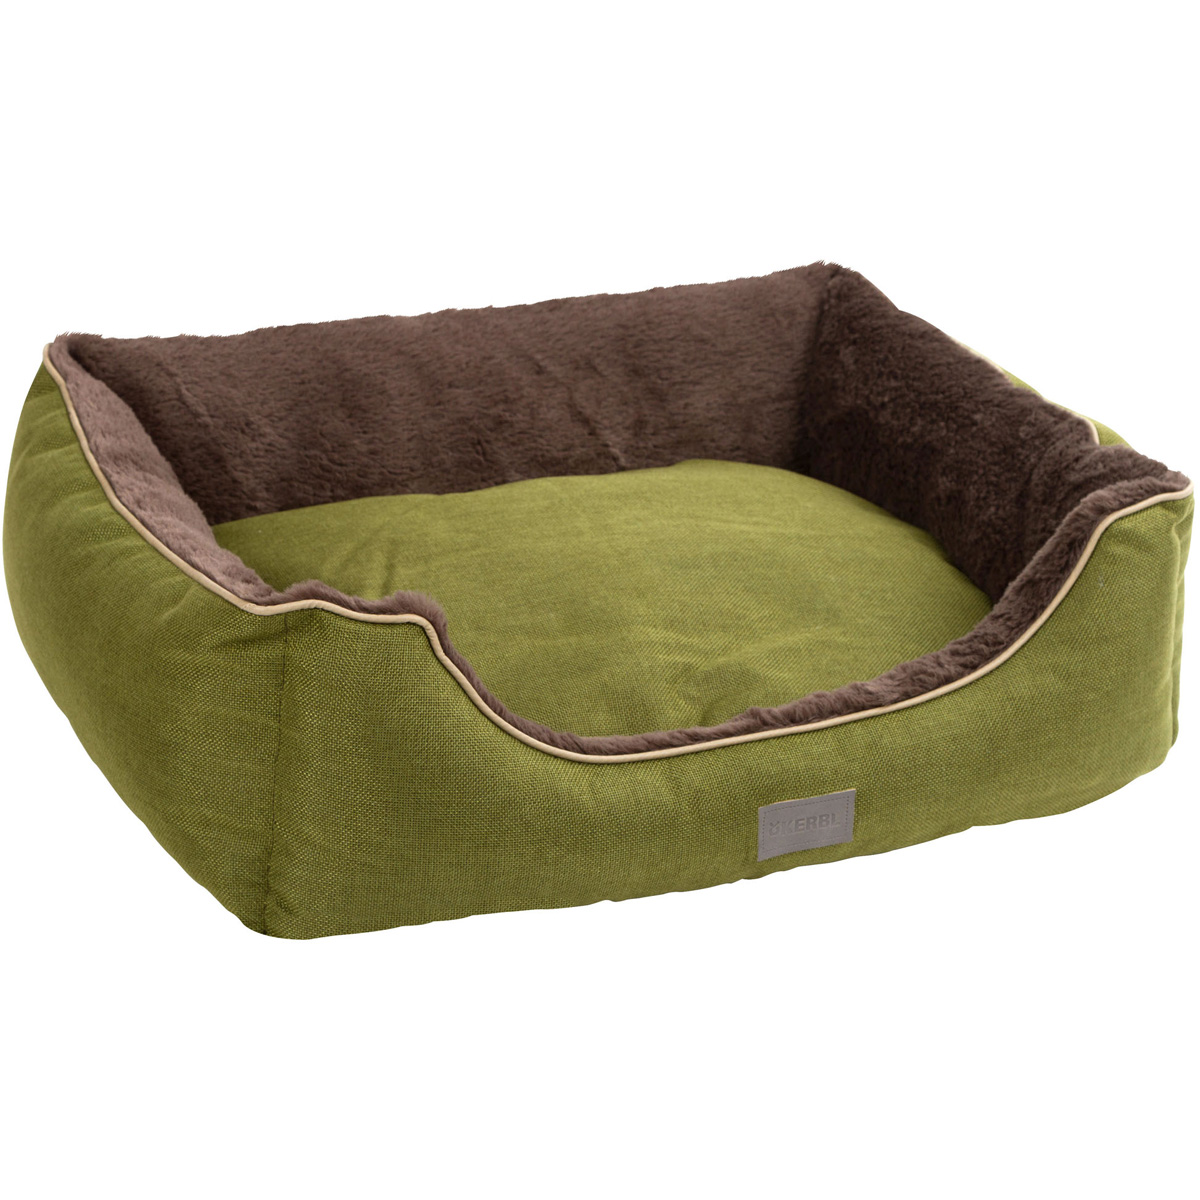 Snugly bed Samuel green 50 cm